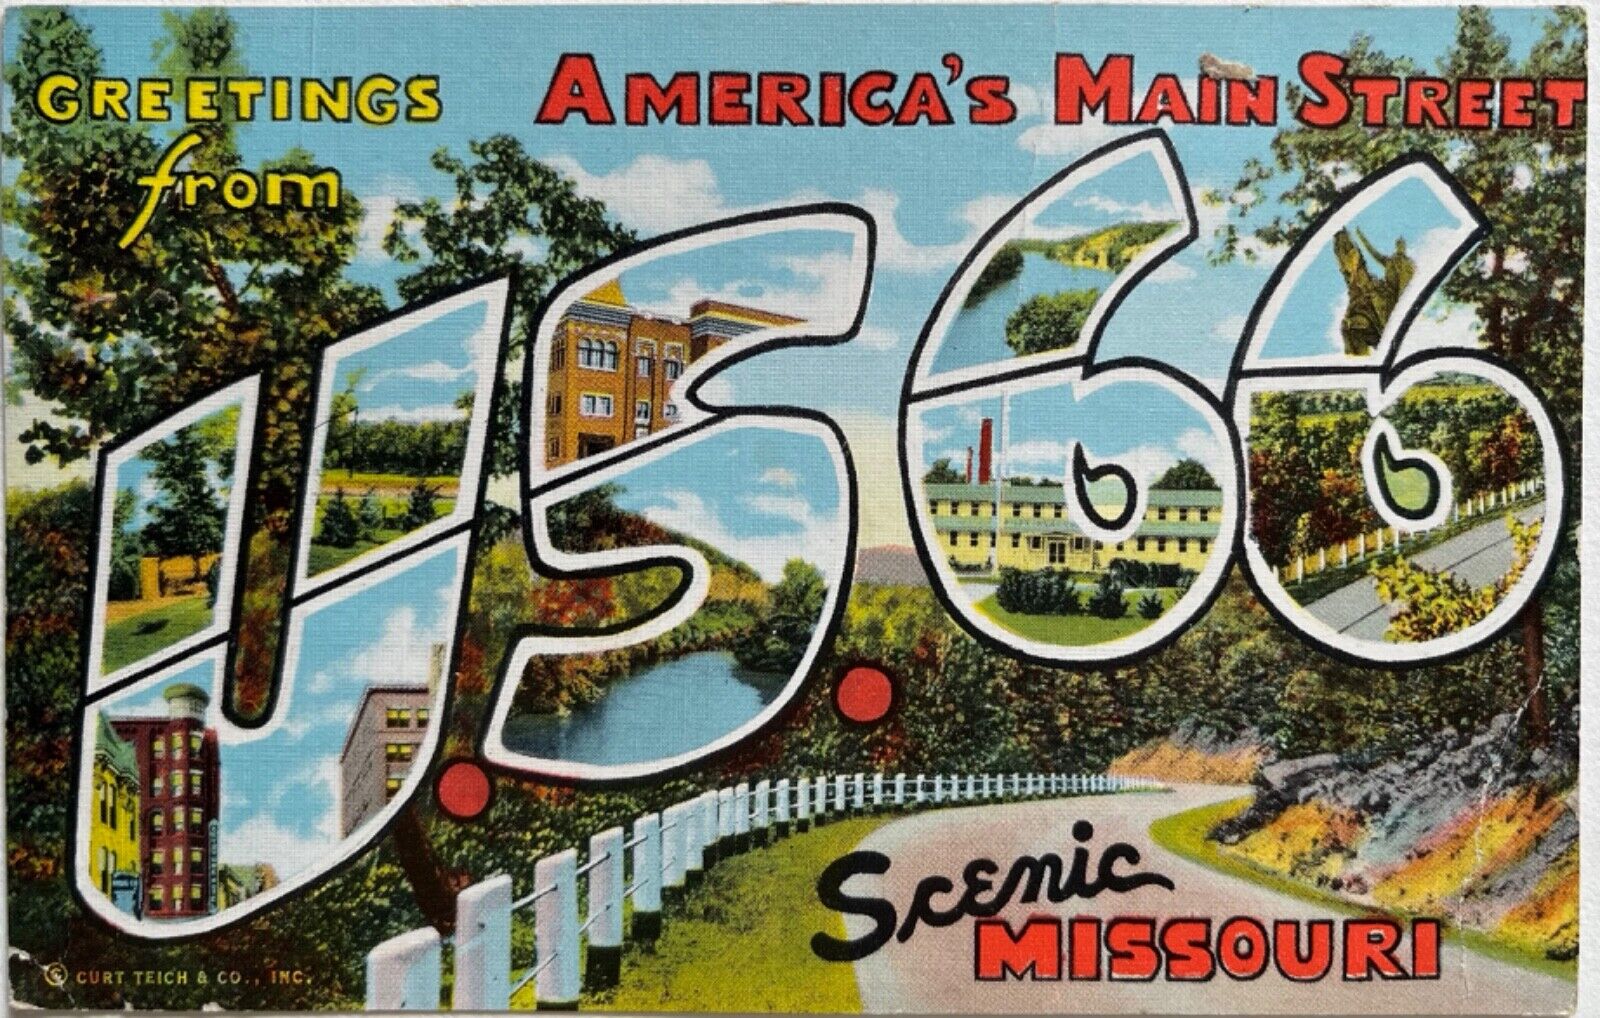 Joplin Missouri Highway Route 66 Large Letter Greetings Vintage Postcard c1940